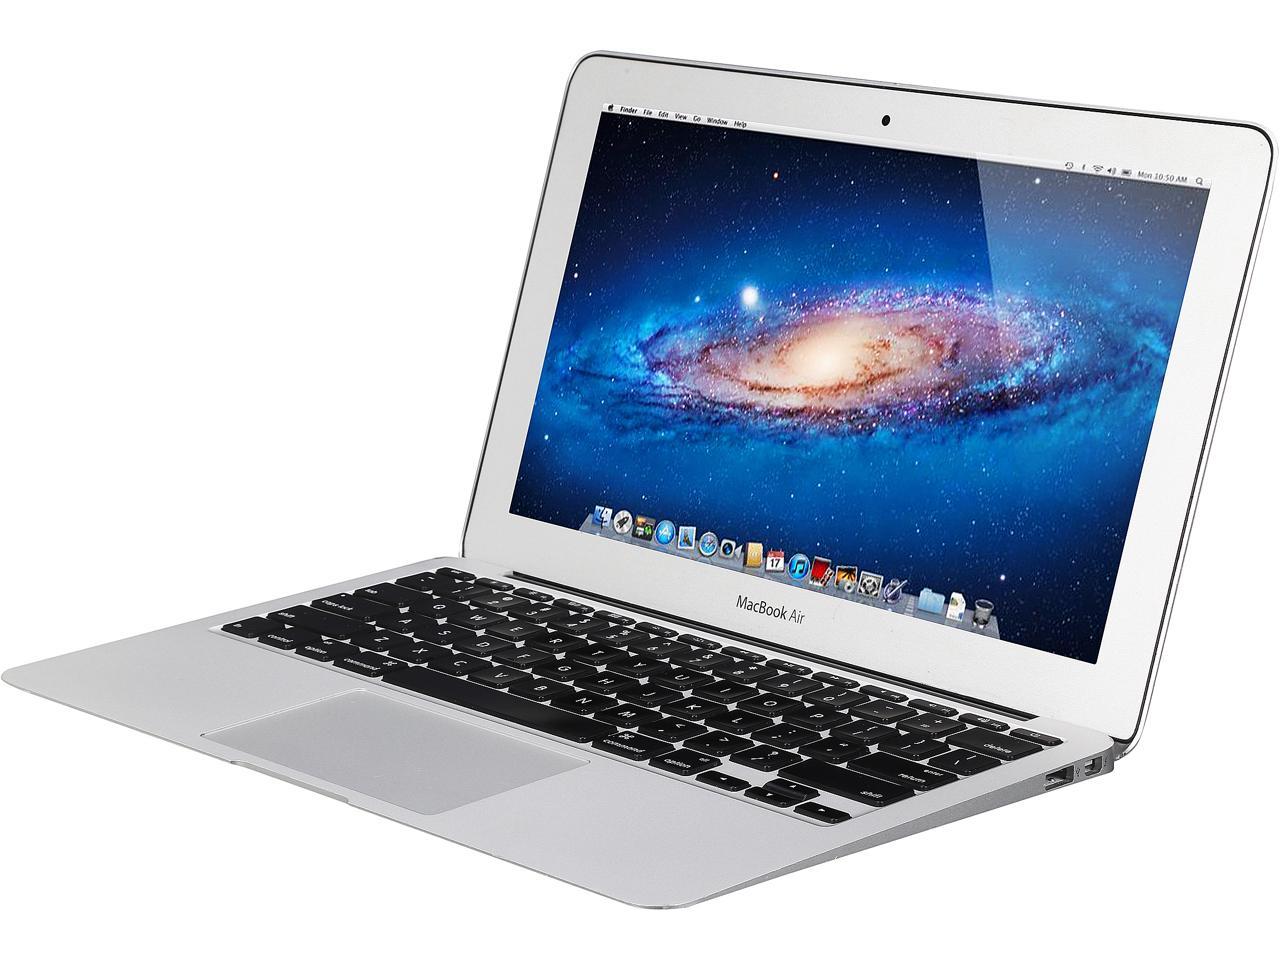 Apple Laptop MacBook Air MC968LL/A Intel Core i5 2nd Gen 2467M (1.60 GHz) 2  GB Memory 64 GB SSD 11.6